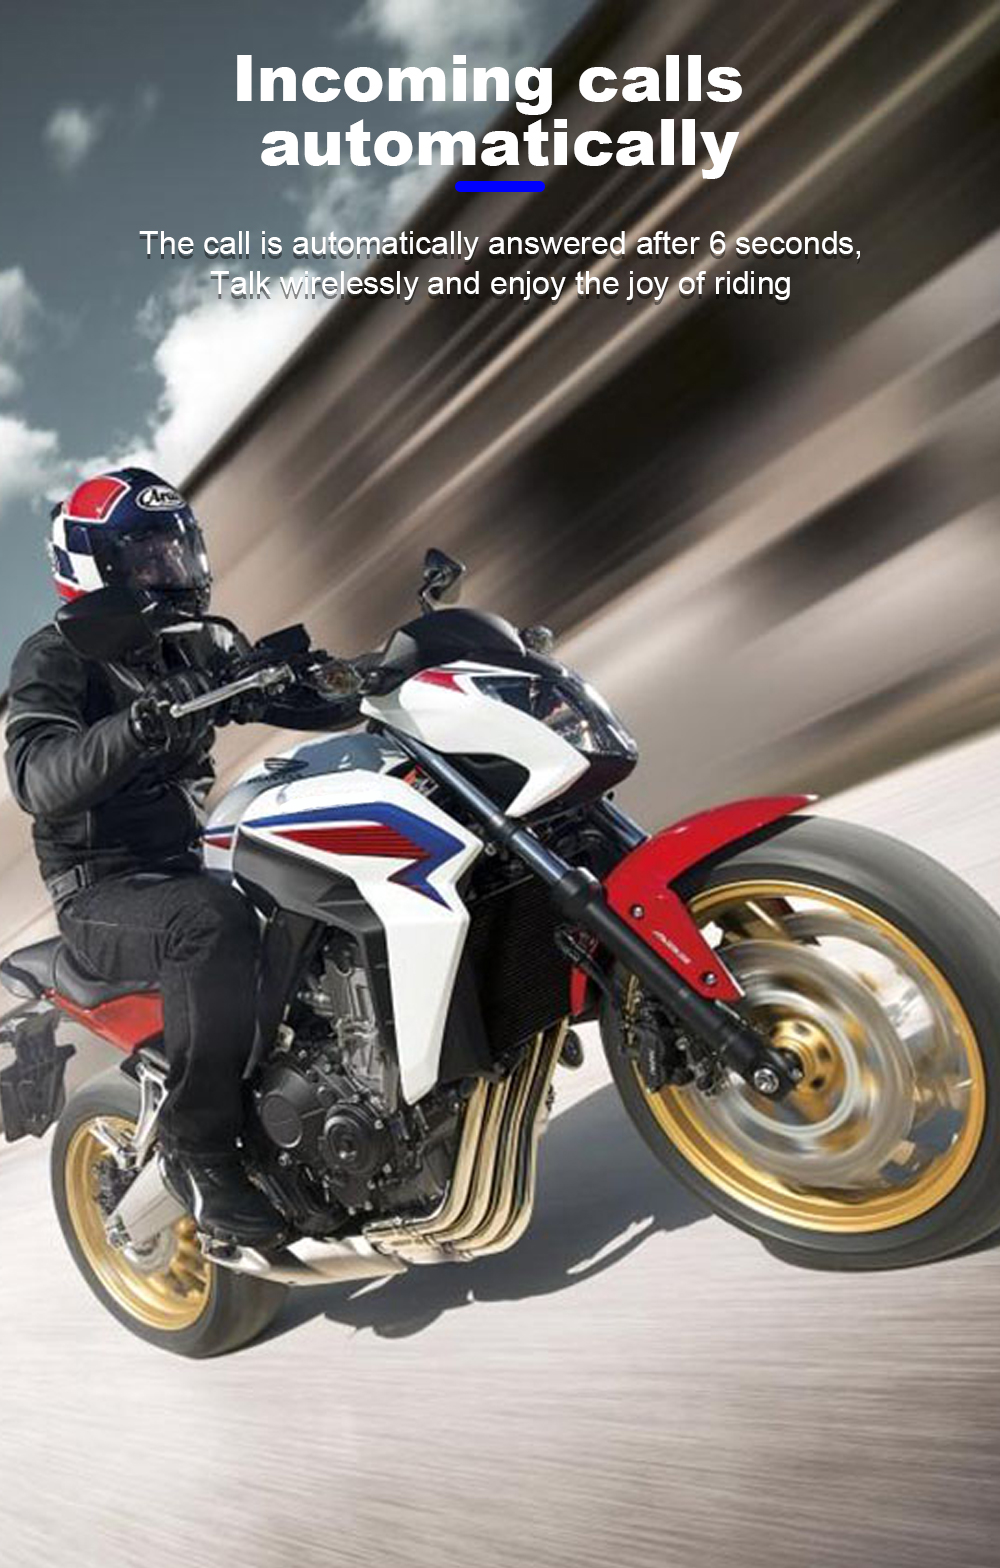 Bakeey-T2-bluetooth-Earphones-Motorcycle-Helmet-Headset-Auto-Answer-Surround-Sound-Motorcycle-Headph-1695851-5